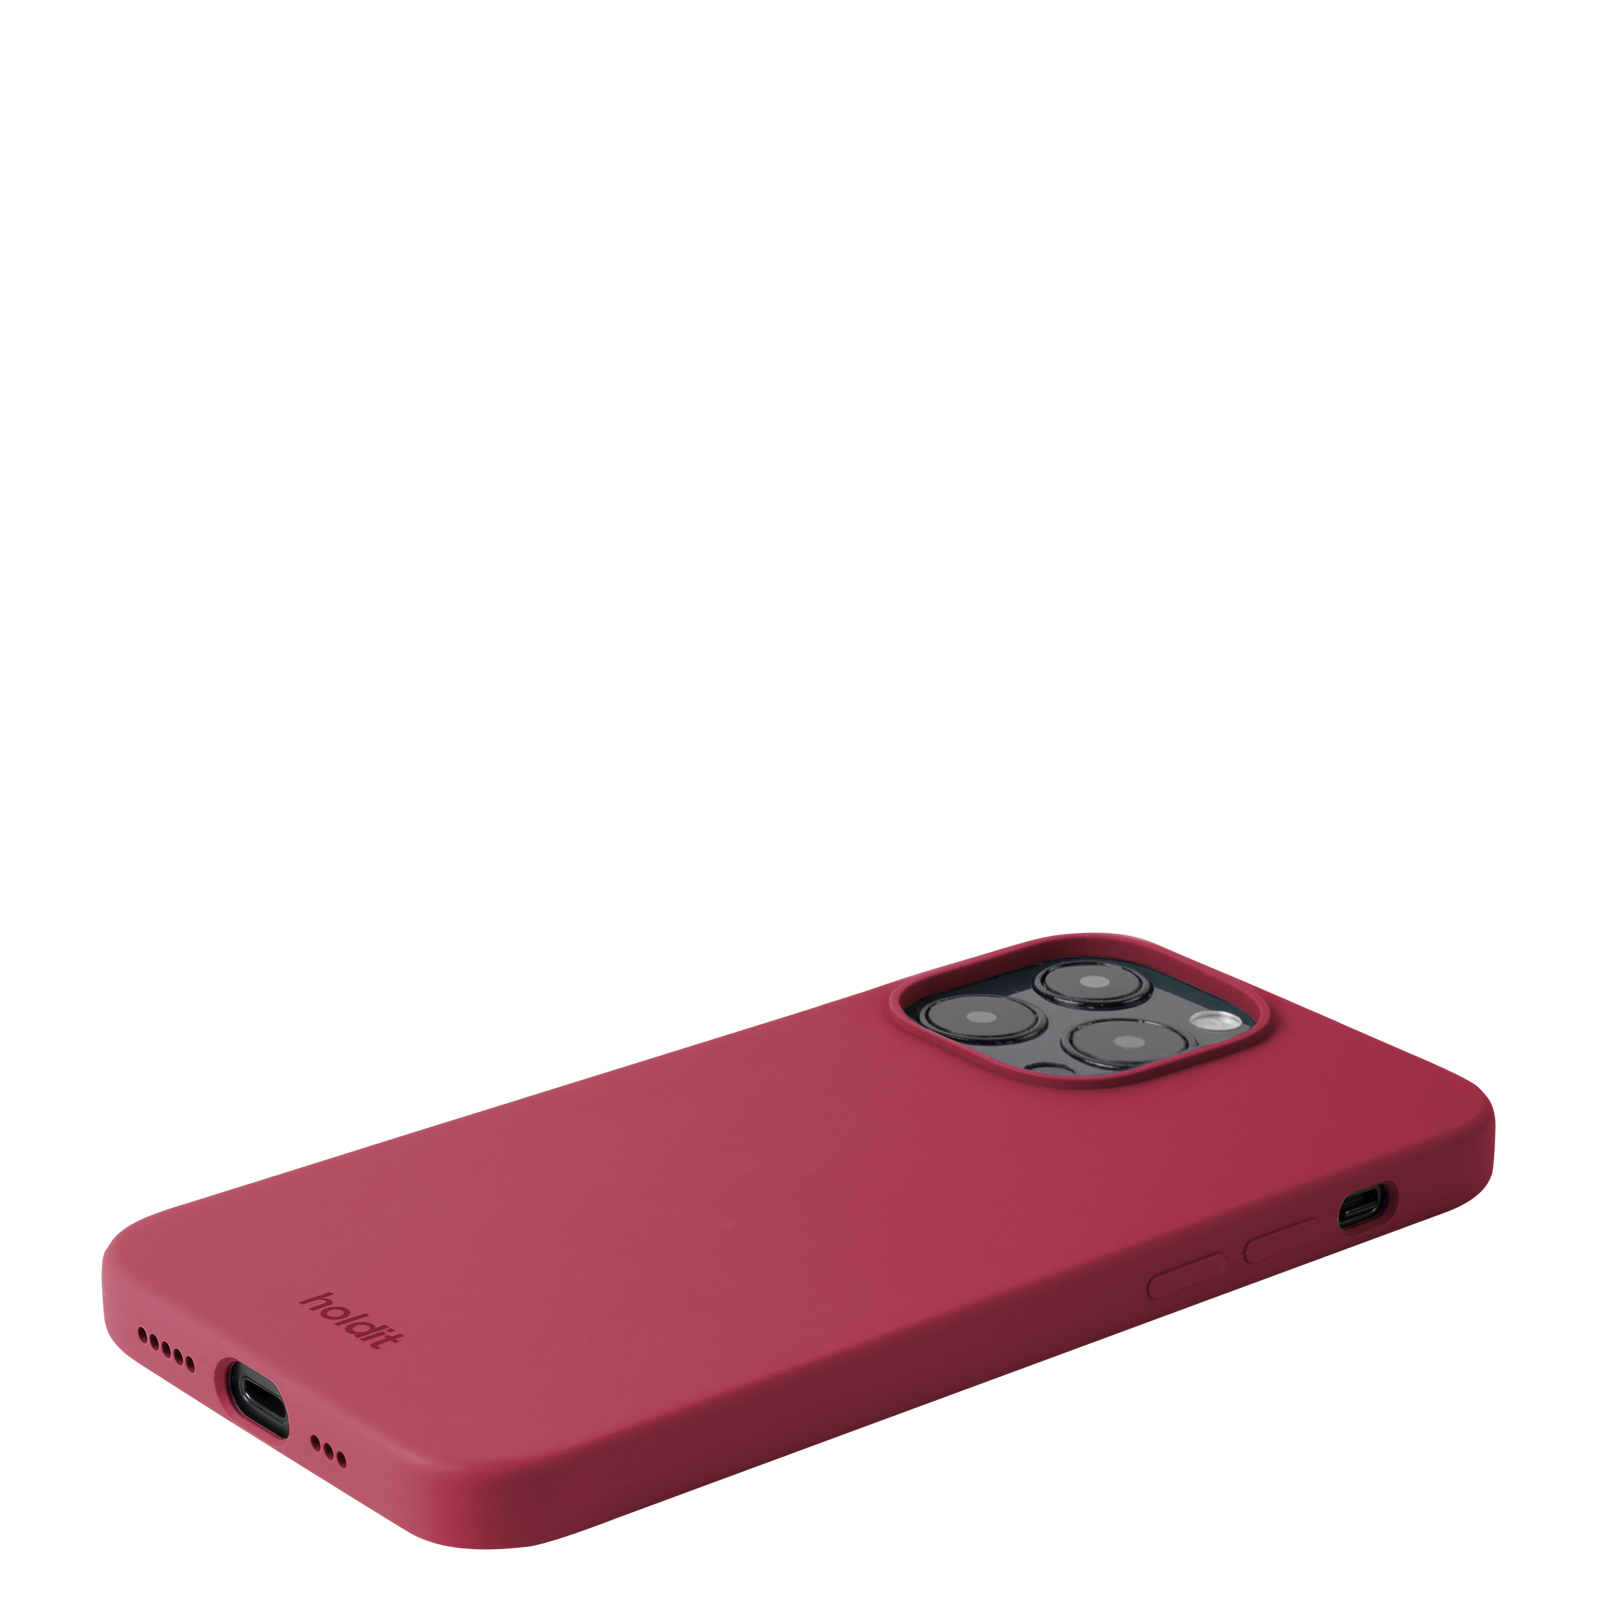 Гръб Holdit за iPhone 14 Pro Max, Silicone Case, Red Velvet